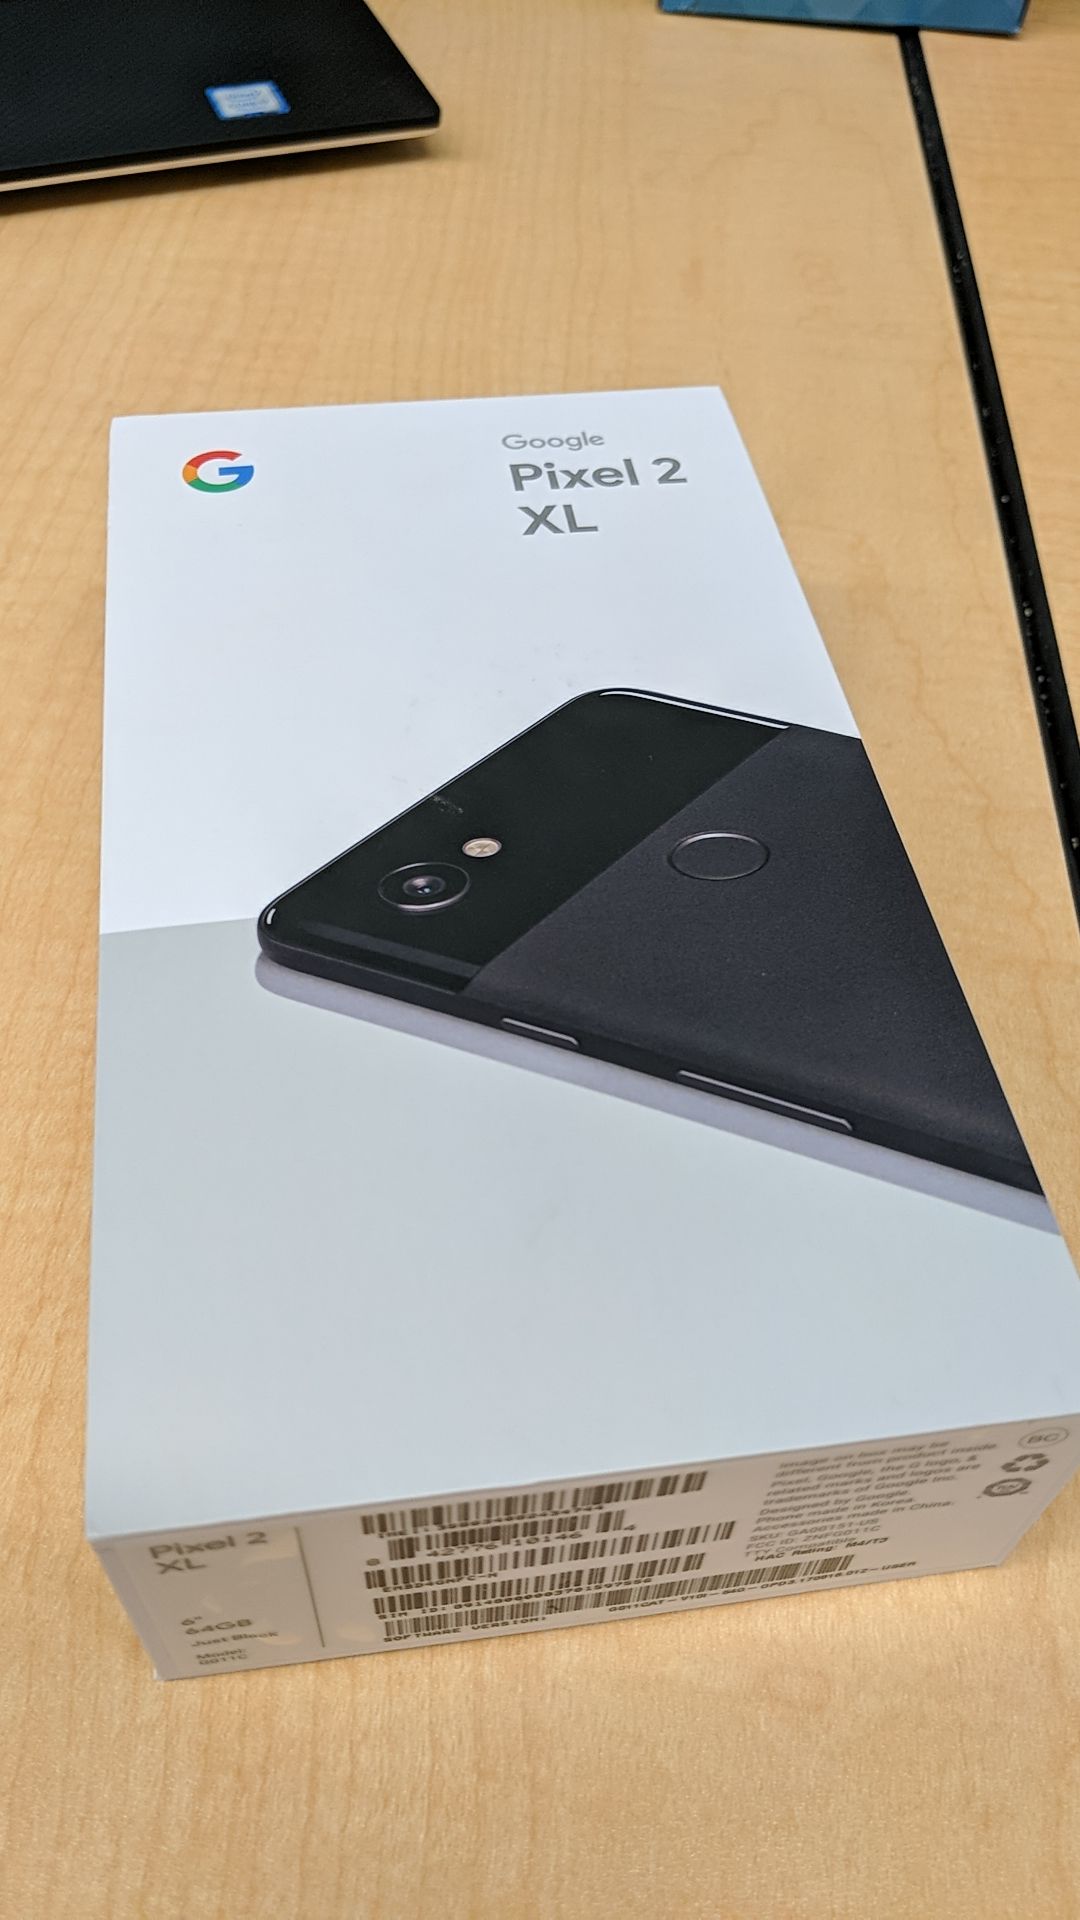 Google Pixel 2 XL (64GB) - Excellent Condition!